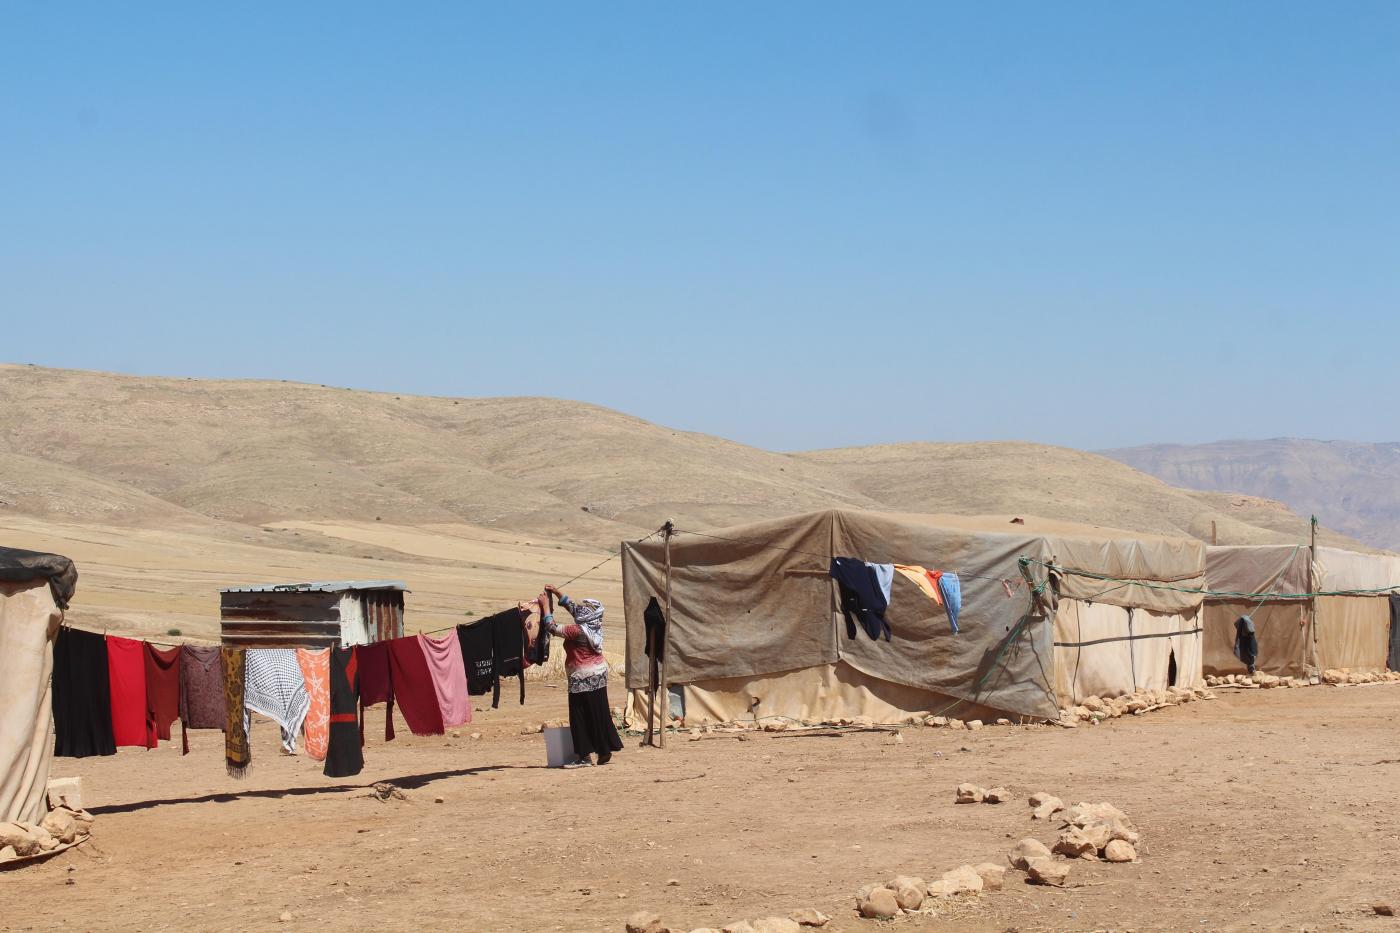 European diplomats pay solidarity visit to afflicted Palestinian community in Jordan Valley